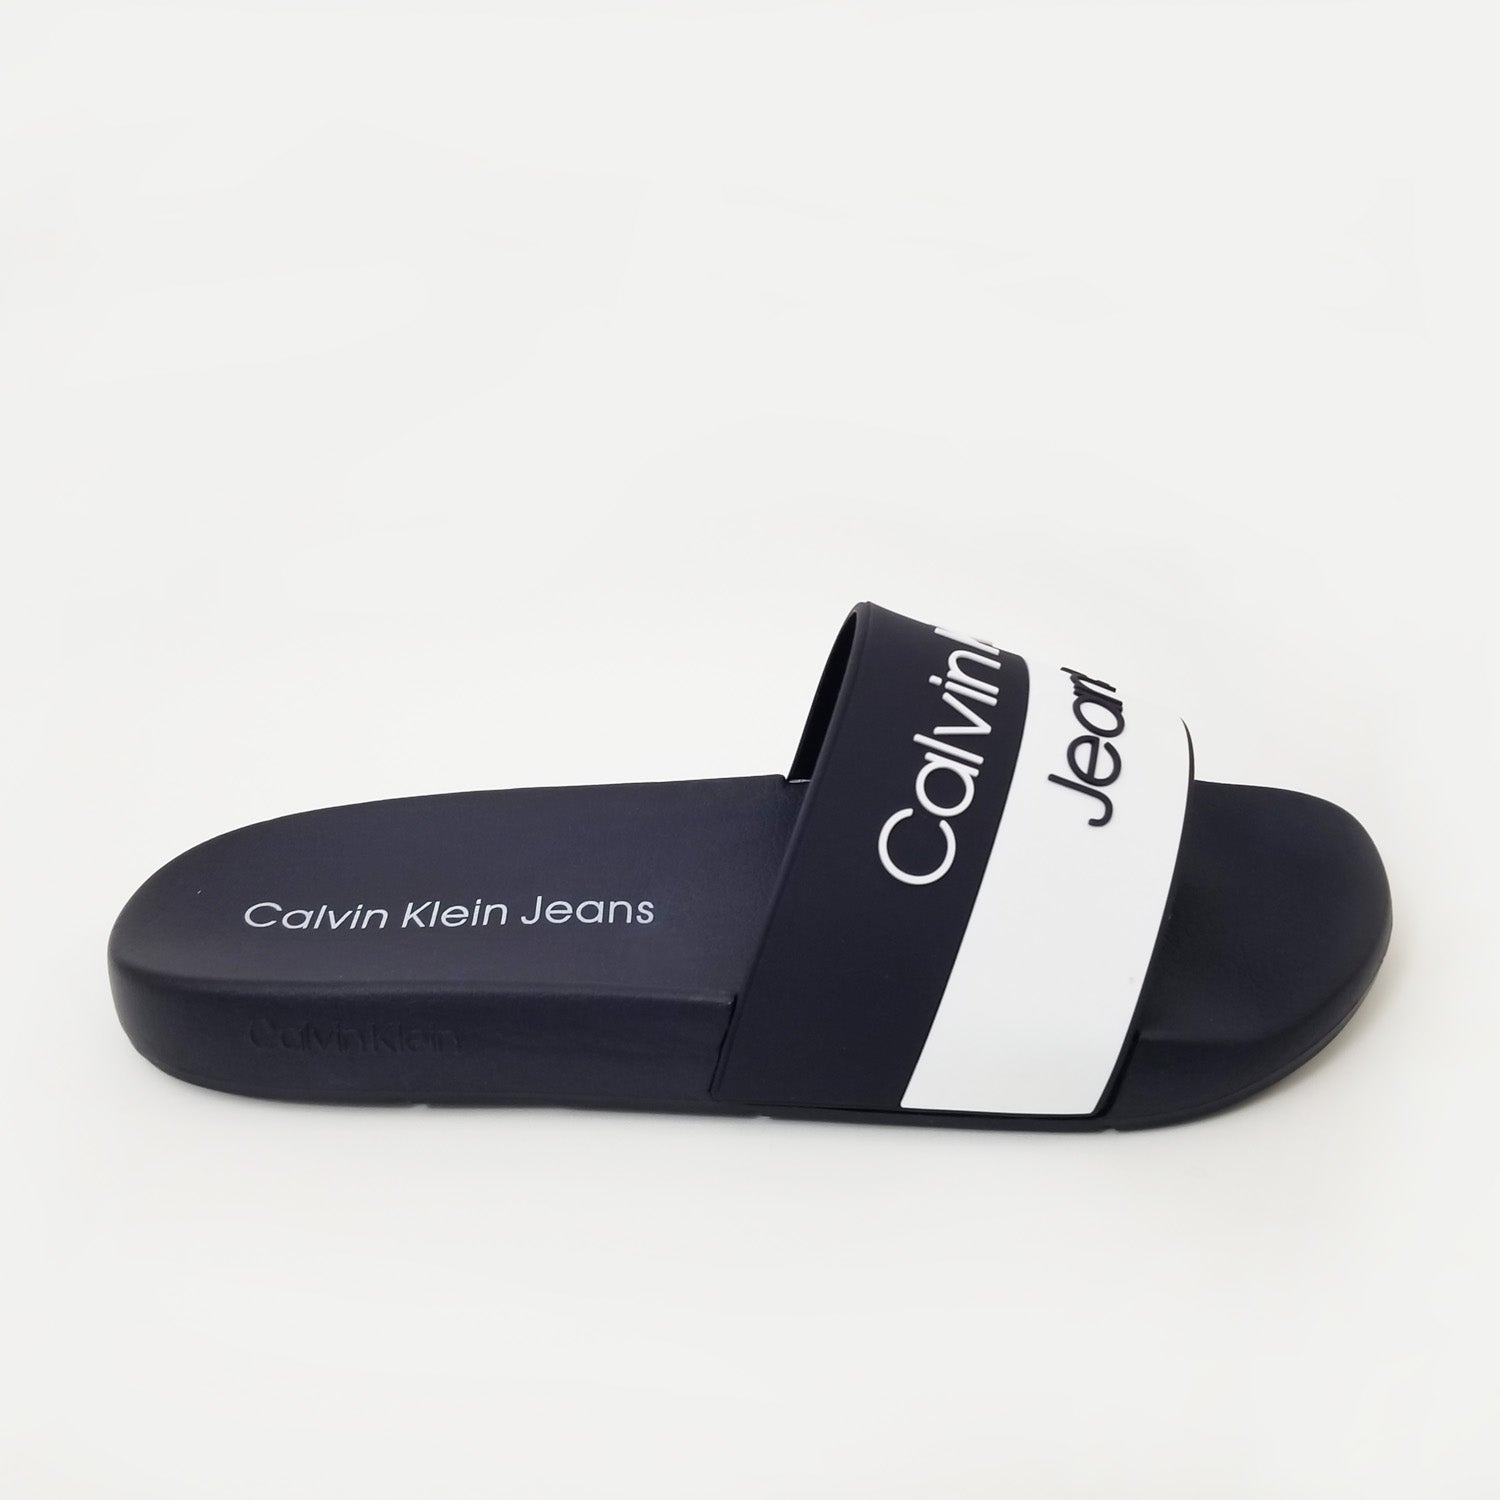 Calvin Klein Jeans Mackee Nappa White, Black - Shoes Flip flops Men £ 117.00